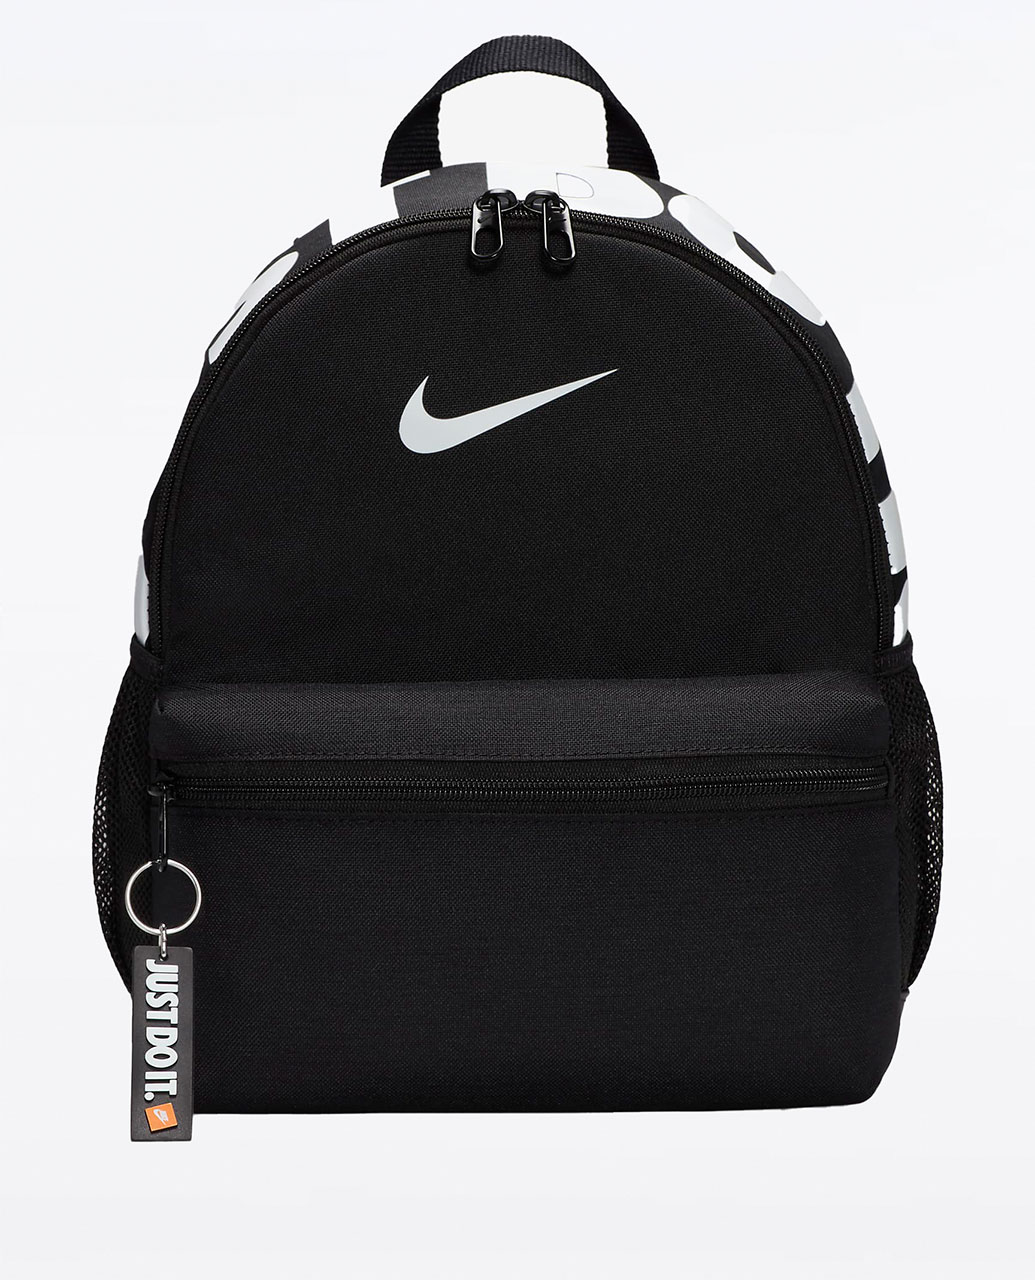 Nike Brasilia Jdi Bag